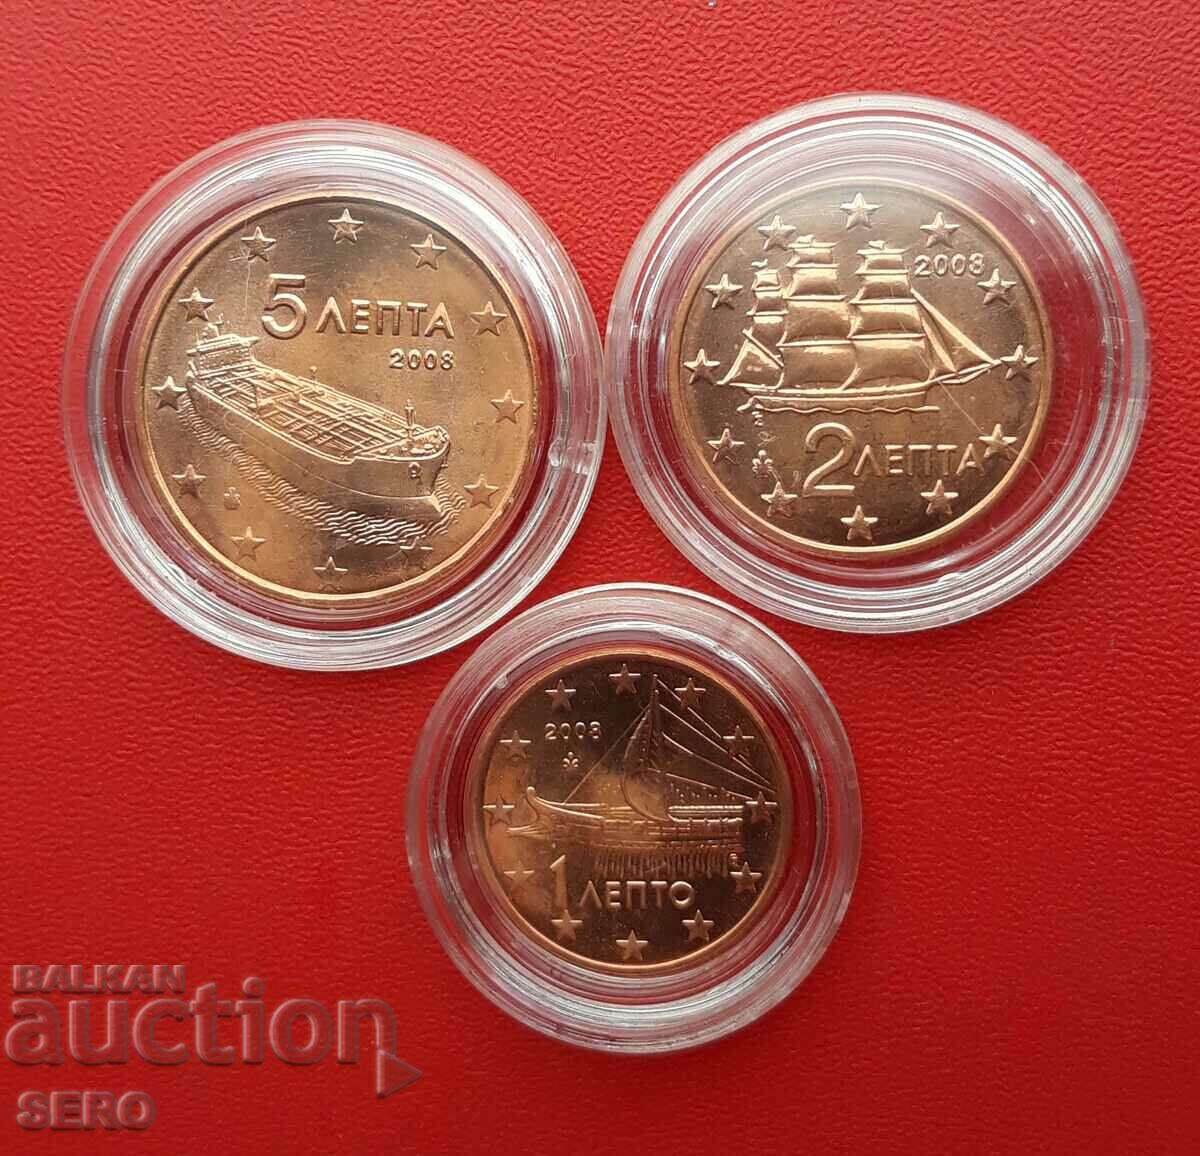 Grecia-lot 3 monede euro 2008 în capsule